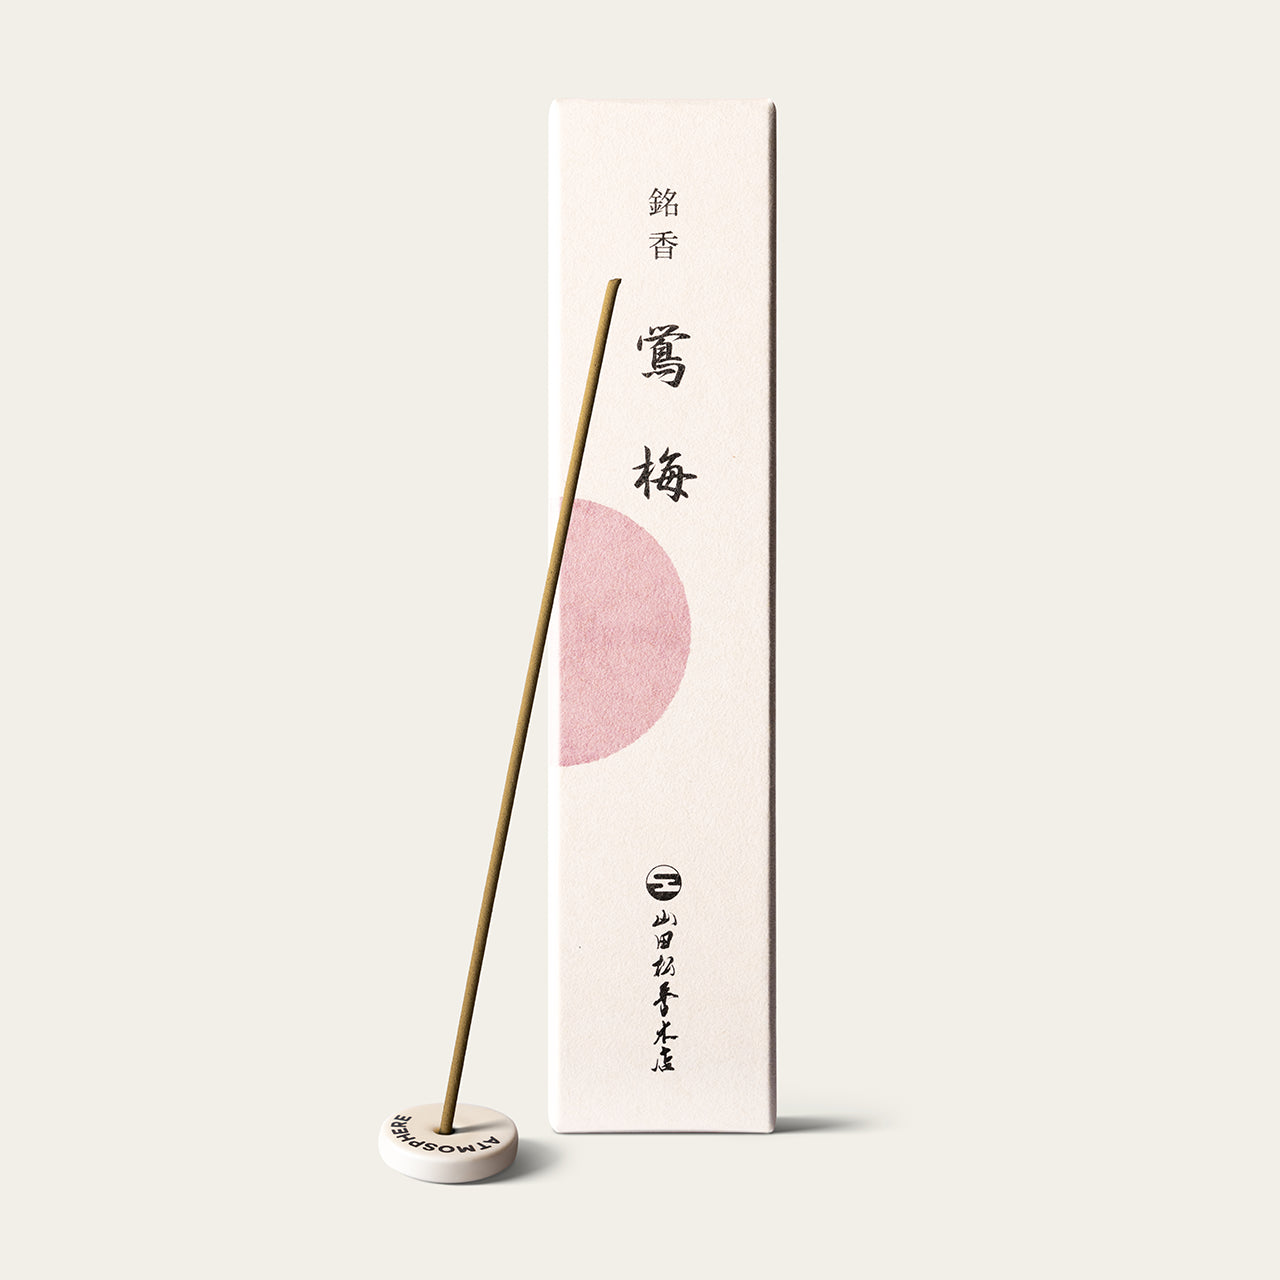 Yamadamatsu Premium Songbird and Blossoms Obai Japanese incense sticks (75 sticks) with Atmosphere ceramic incense holder